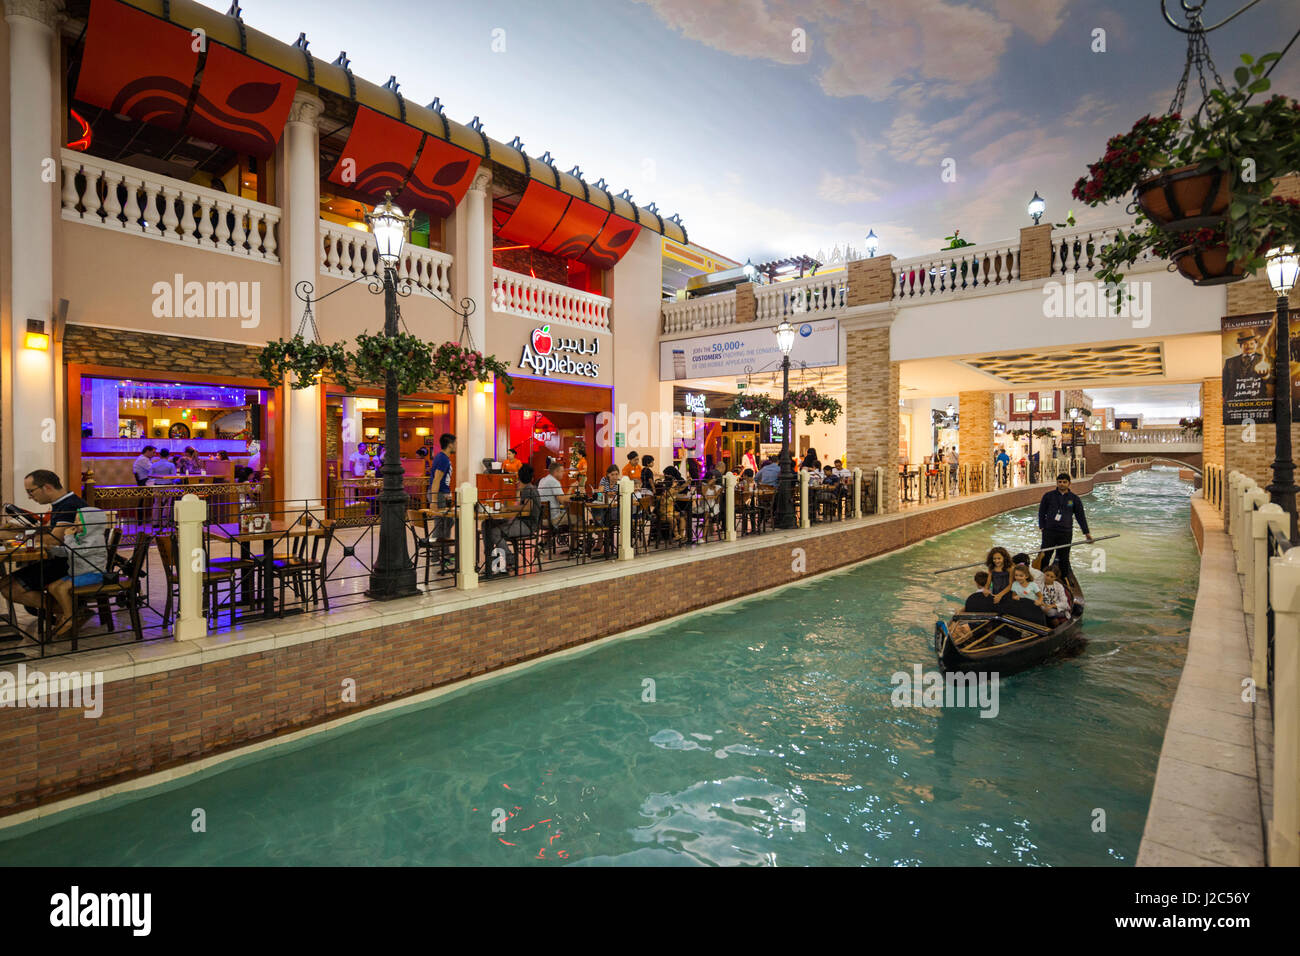 Qatar, Doha, Villaggio Shopping Mall, interior with Venetian Gondola Canal Stock Photo